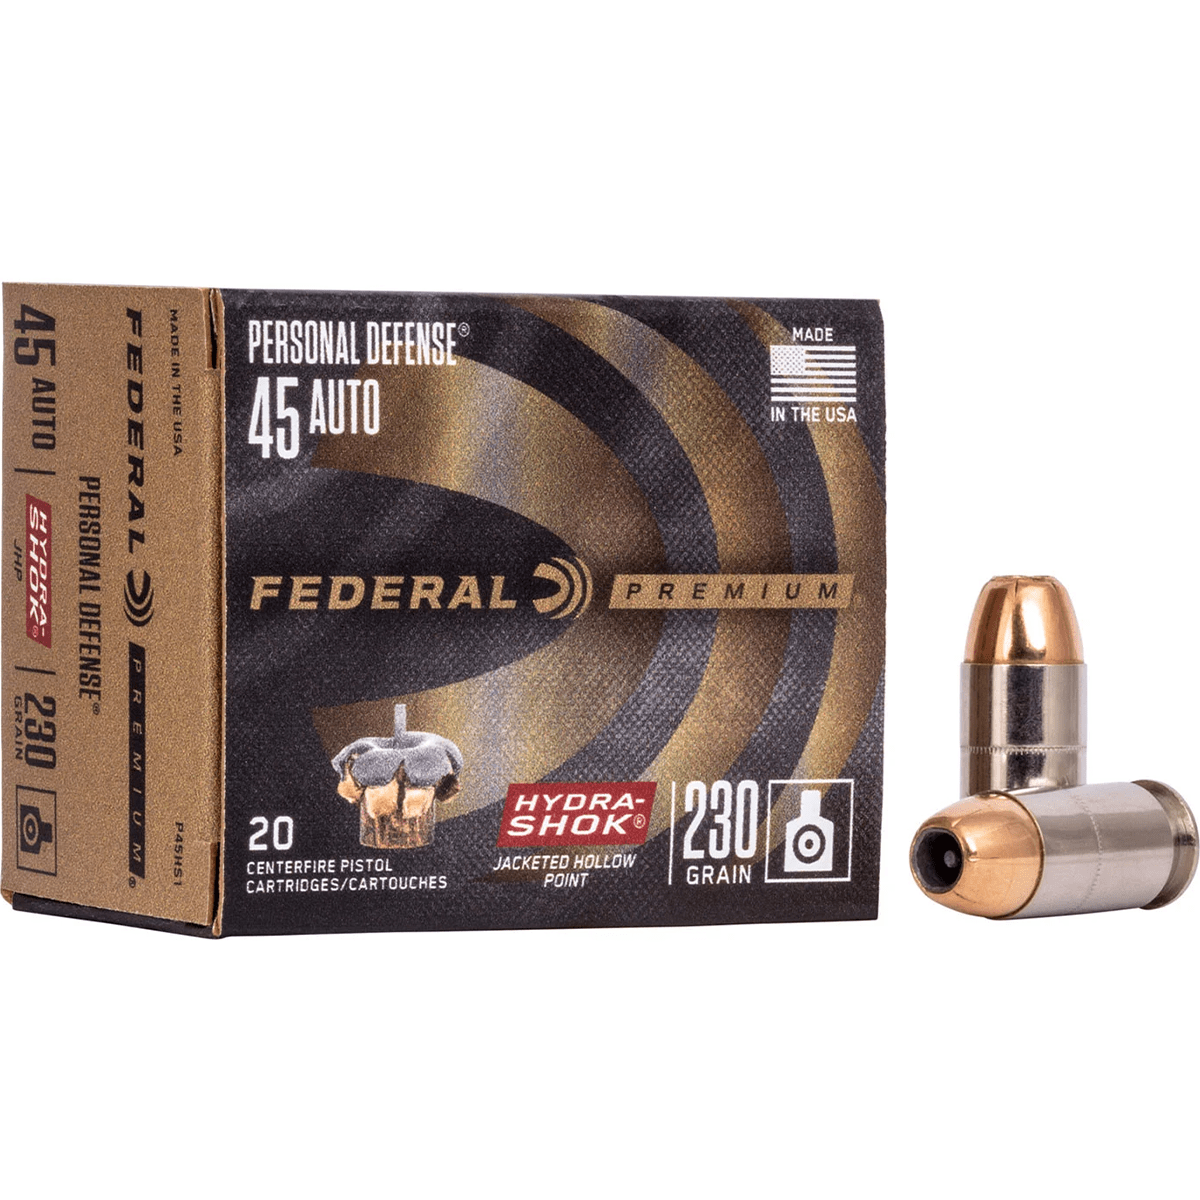 Federal Premium Personal Defense 45 ACP 230 gr Hydra-Shok Jacketed Hollow Point Handgun Ammo